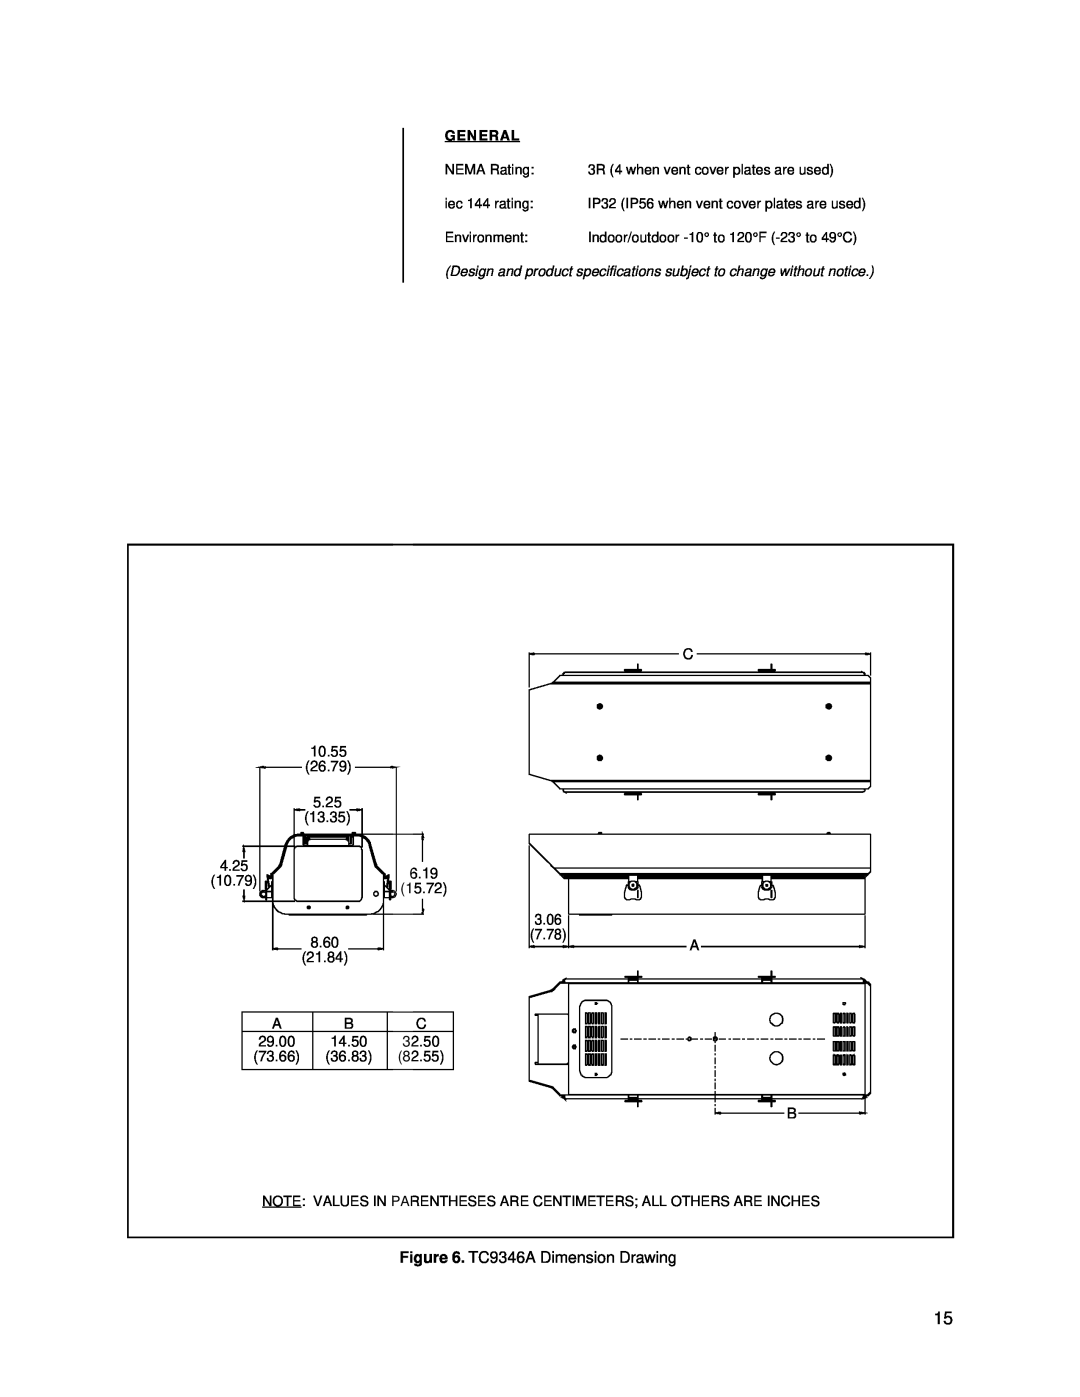 Bosch Appliances tc9346a instruction manual TC9346A Dimension Drawing, General 